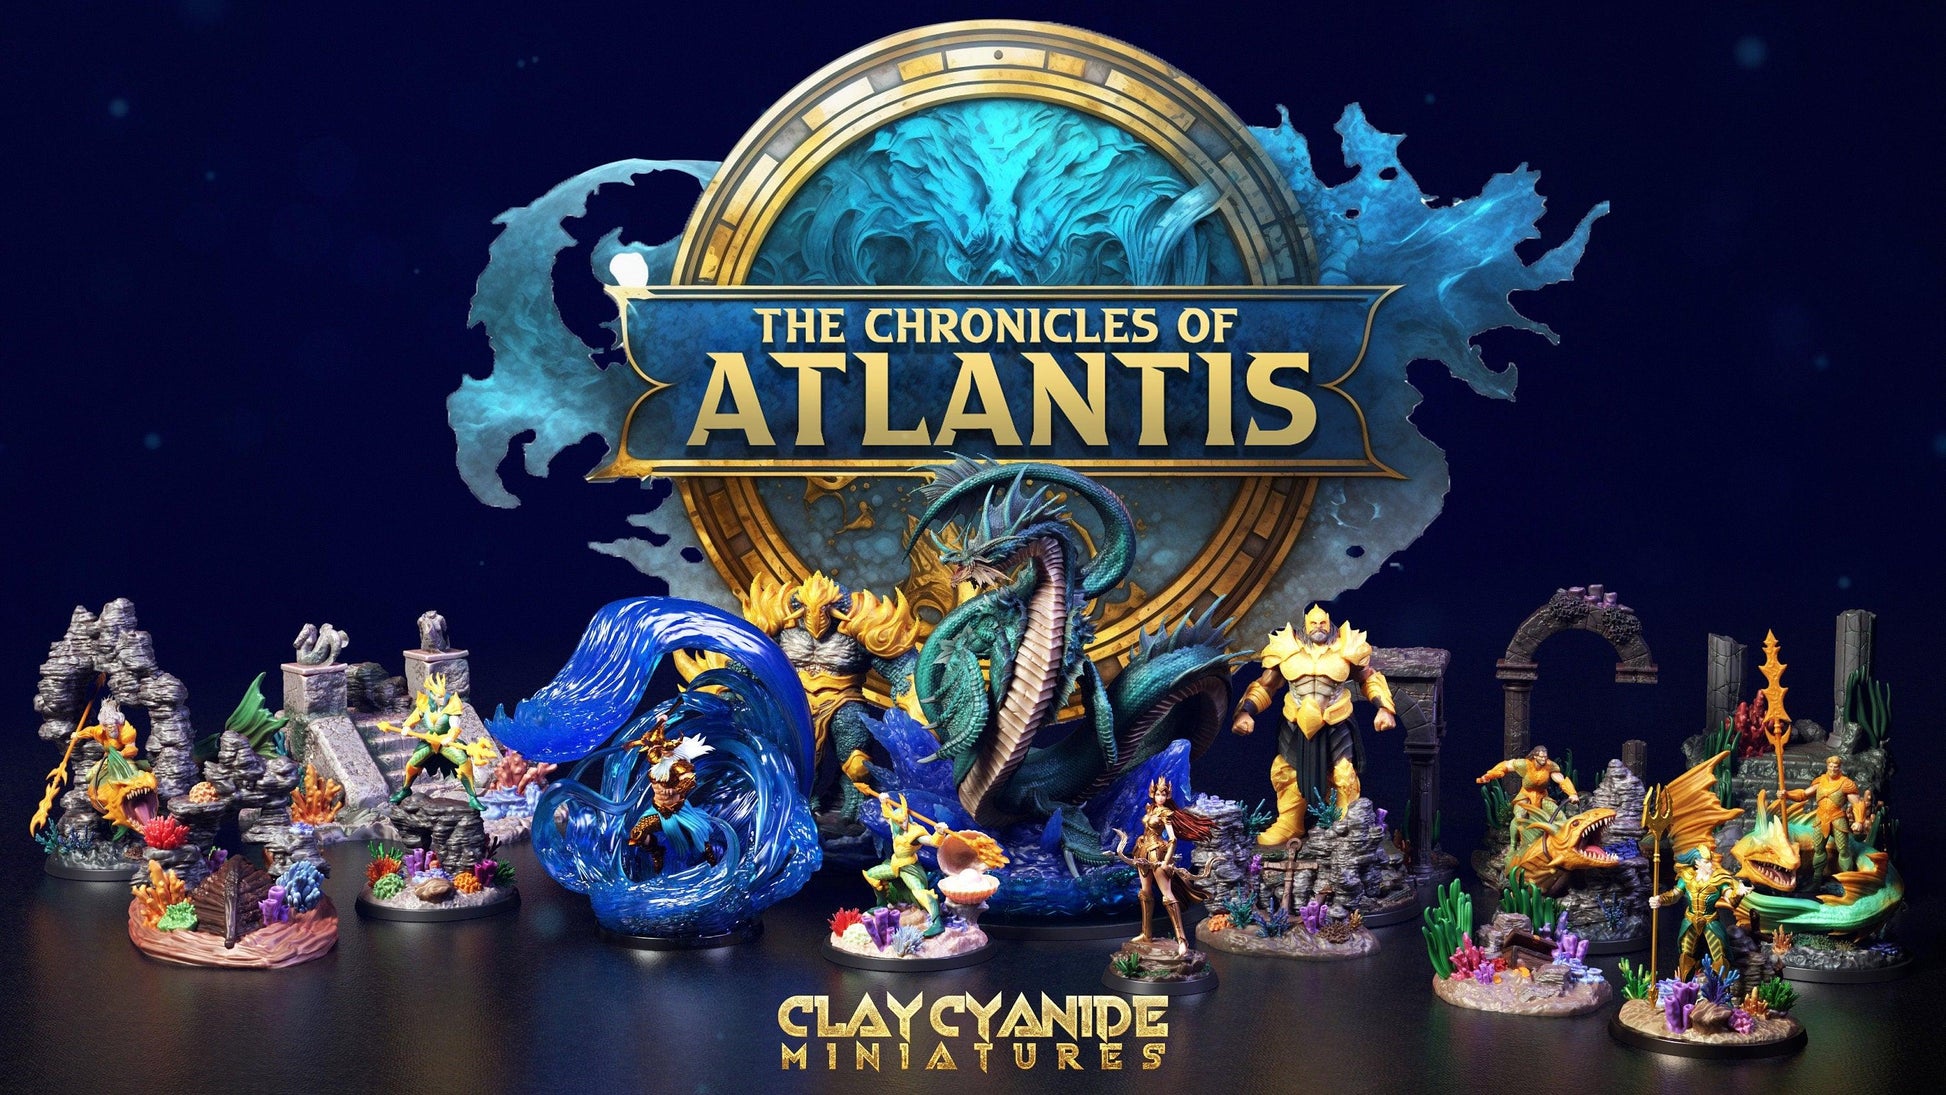 DnD underwater Terrain miniatures | Clay Cyanide | Chronicles of Atlantis | DnD Miniature Dungeons and Dragons DnD 5e - Plague Miniatures shop for DnD Miniatures